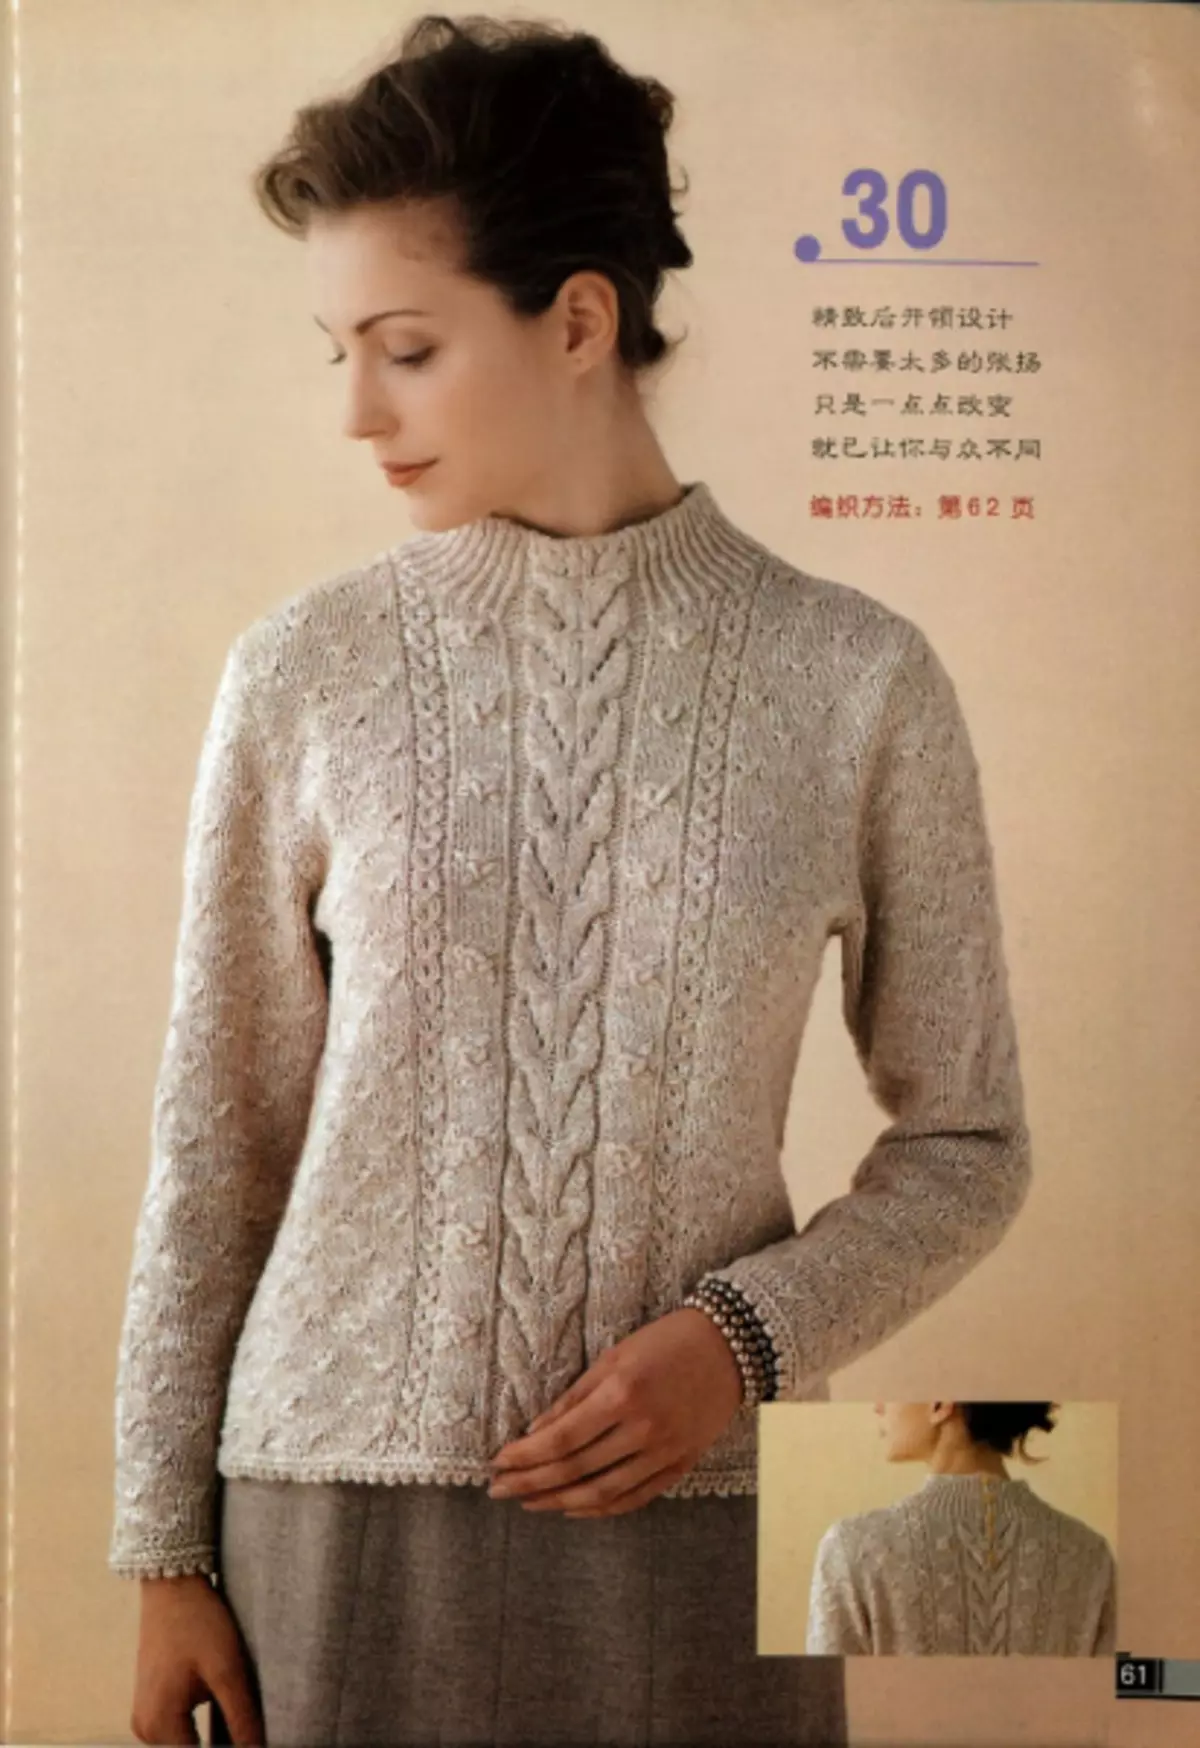 Modelos femininos con agullas de tricotar. Revista con esquemas